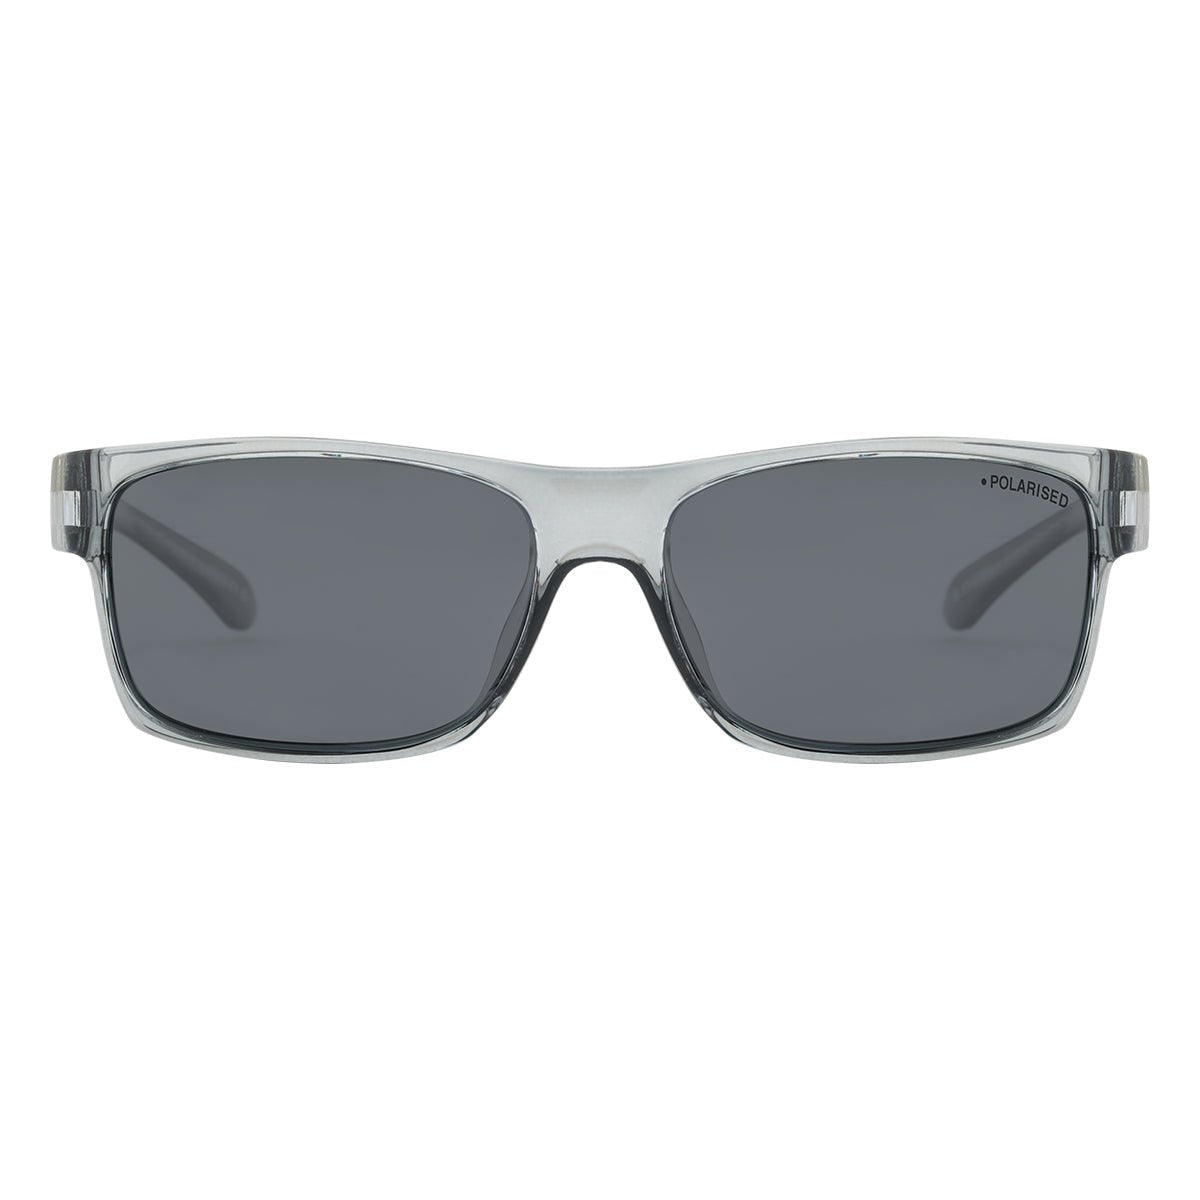 Dirty Dog Furnace Sunglasses - Worthing Watersports - 53566 - Sunglasses - Dirty Dog